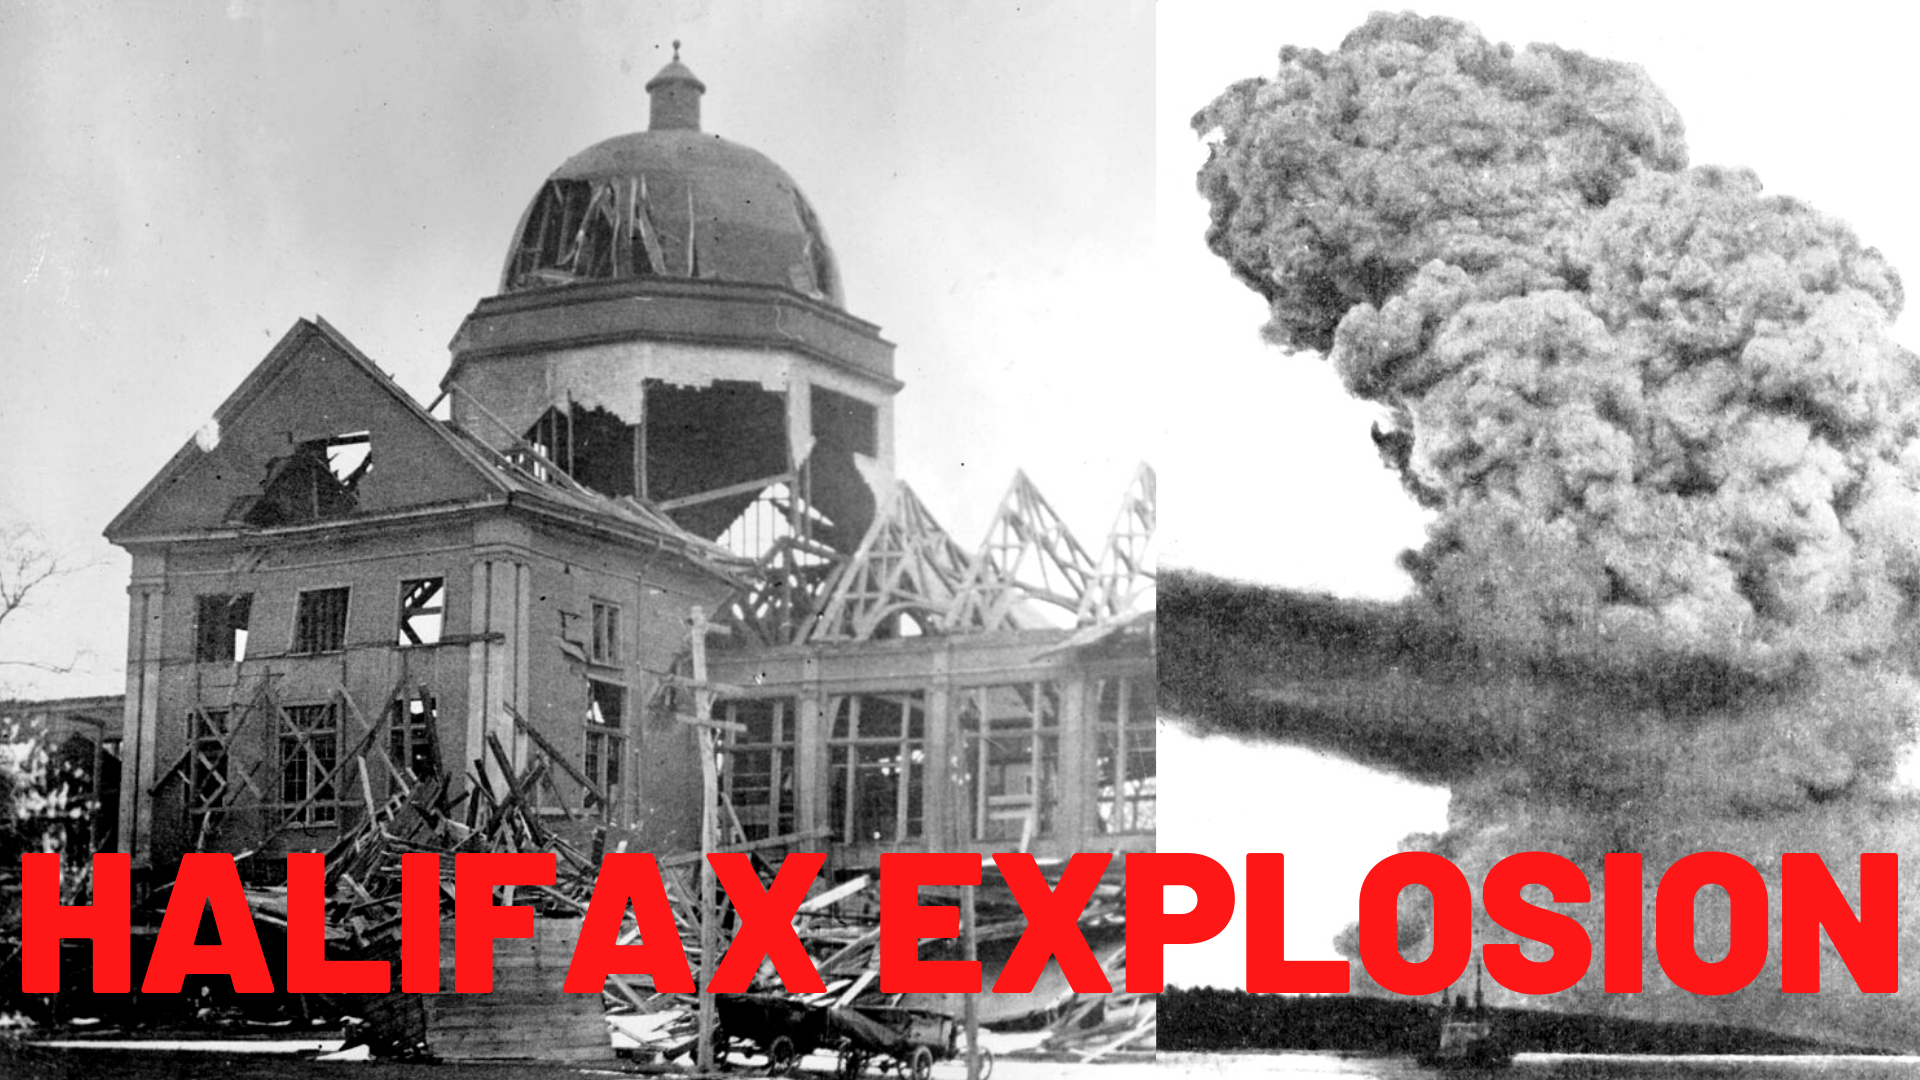 Halifax Explosion